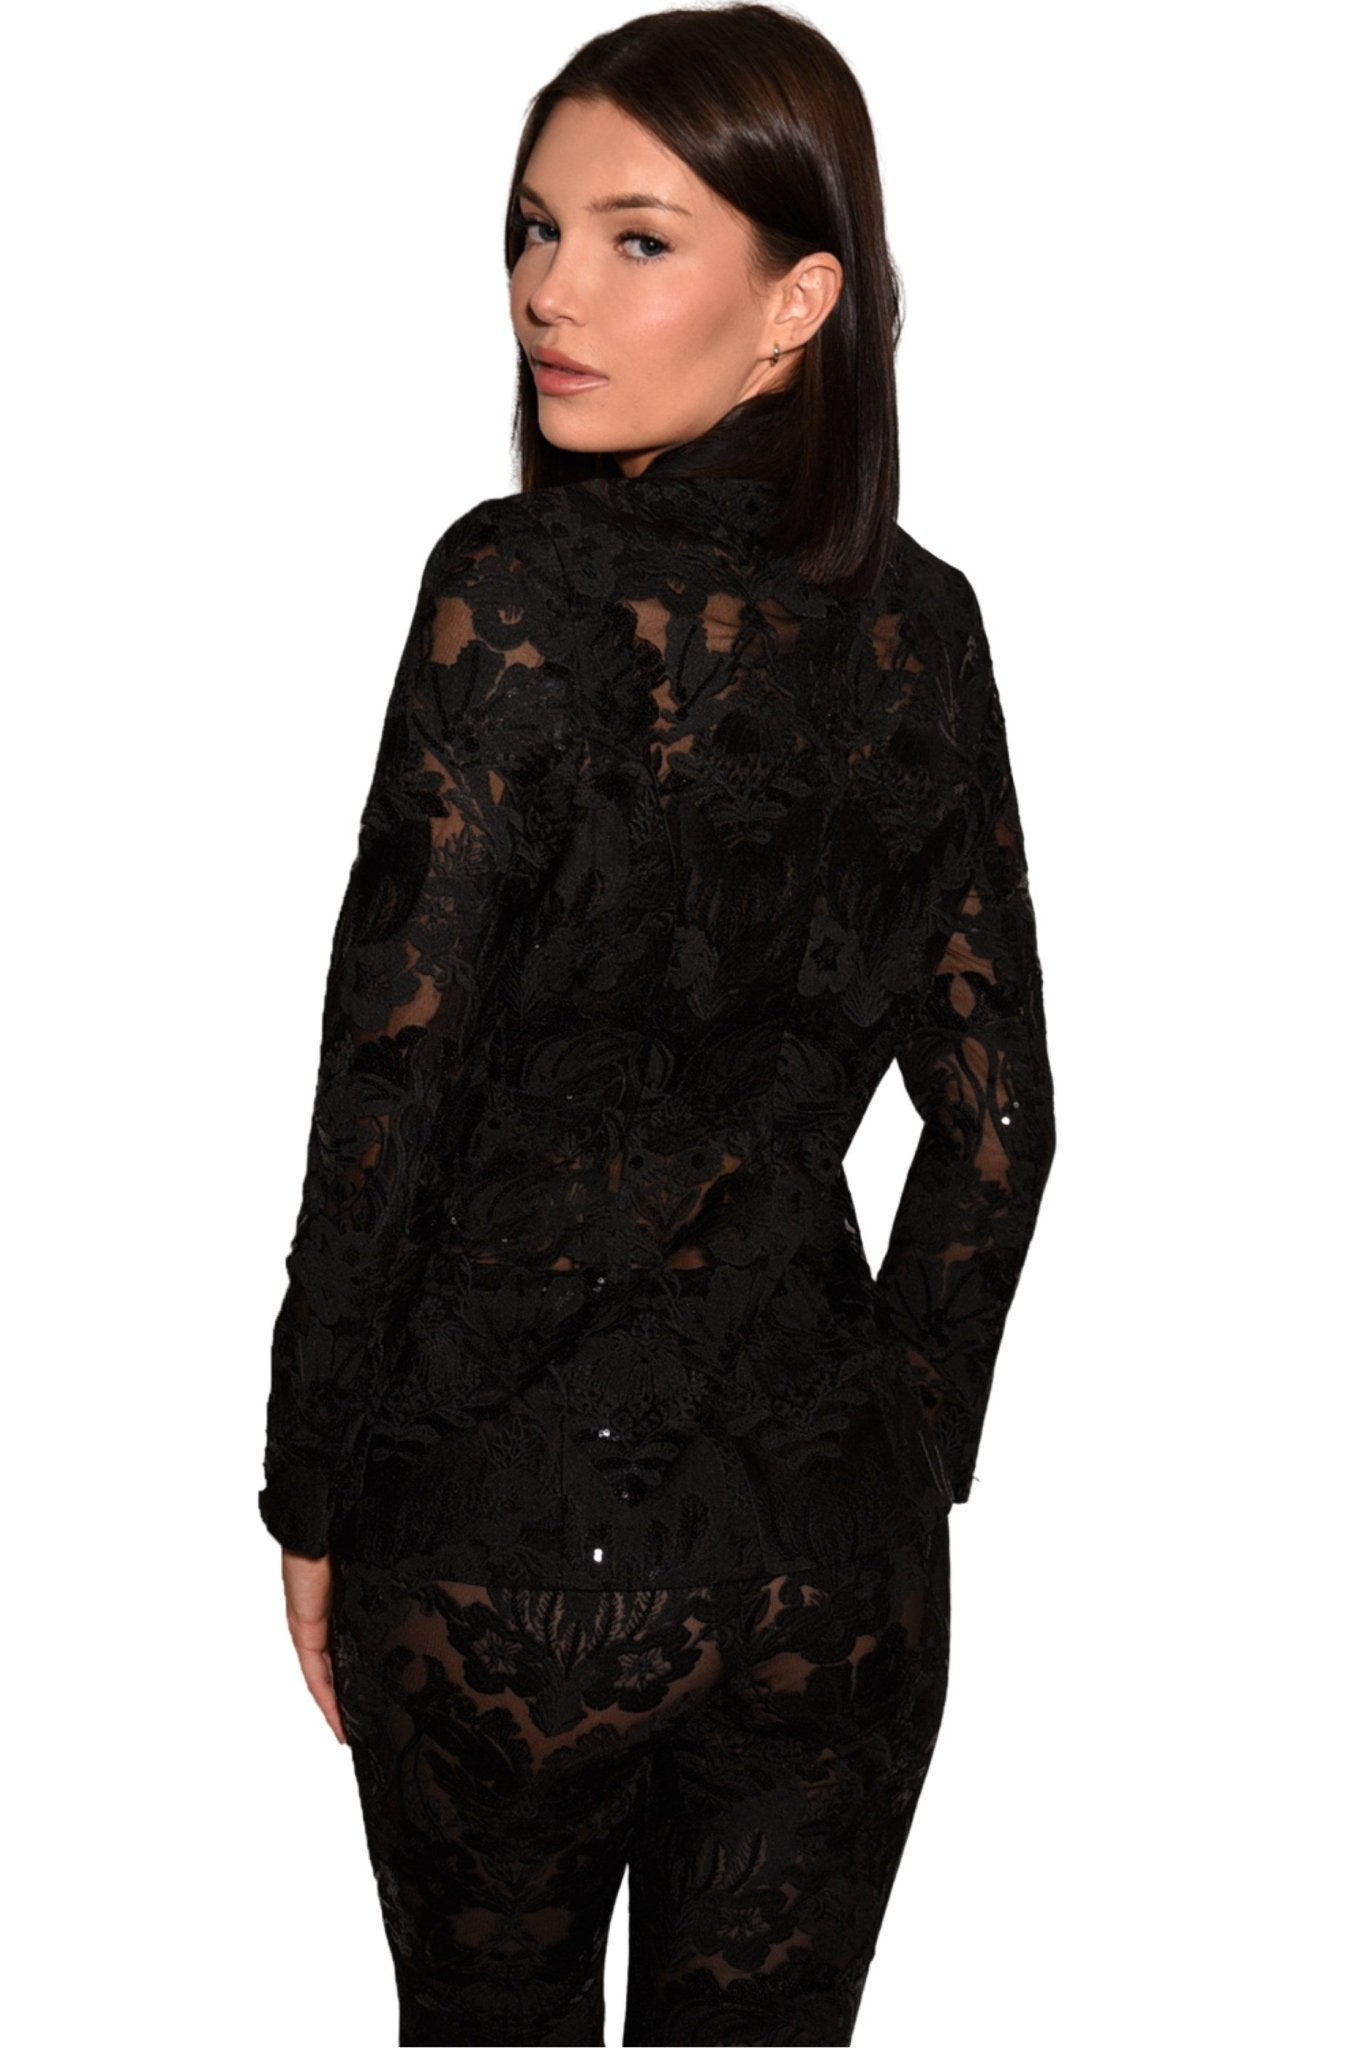 Sara Black Lace Floral Long Sleeve Blazer - Akalia